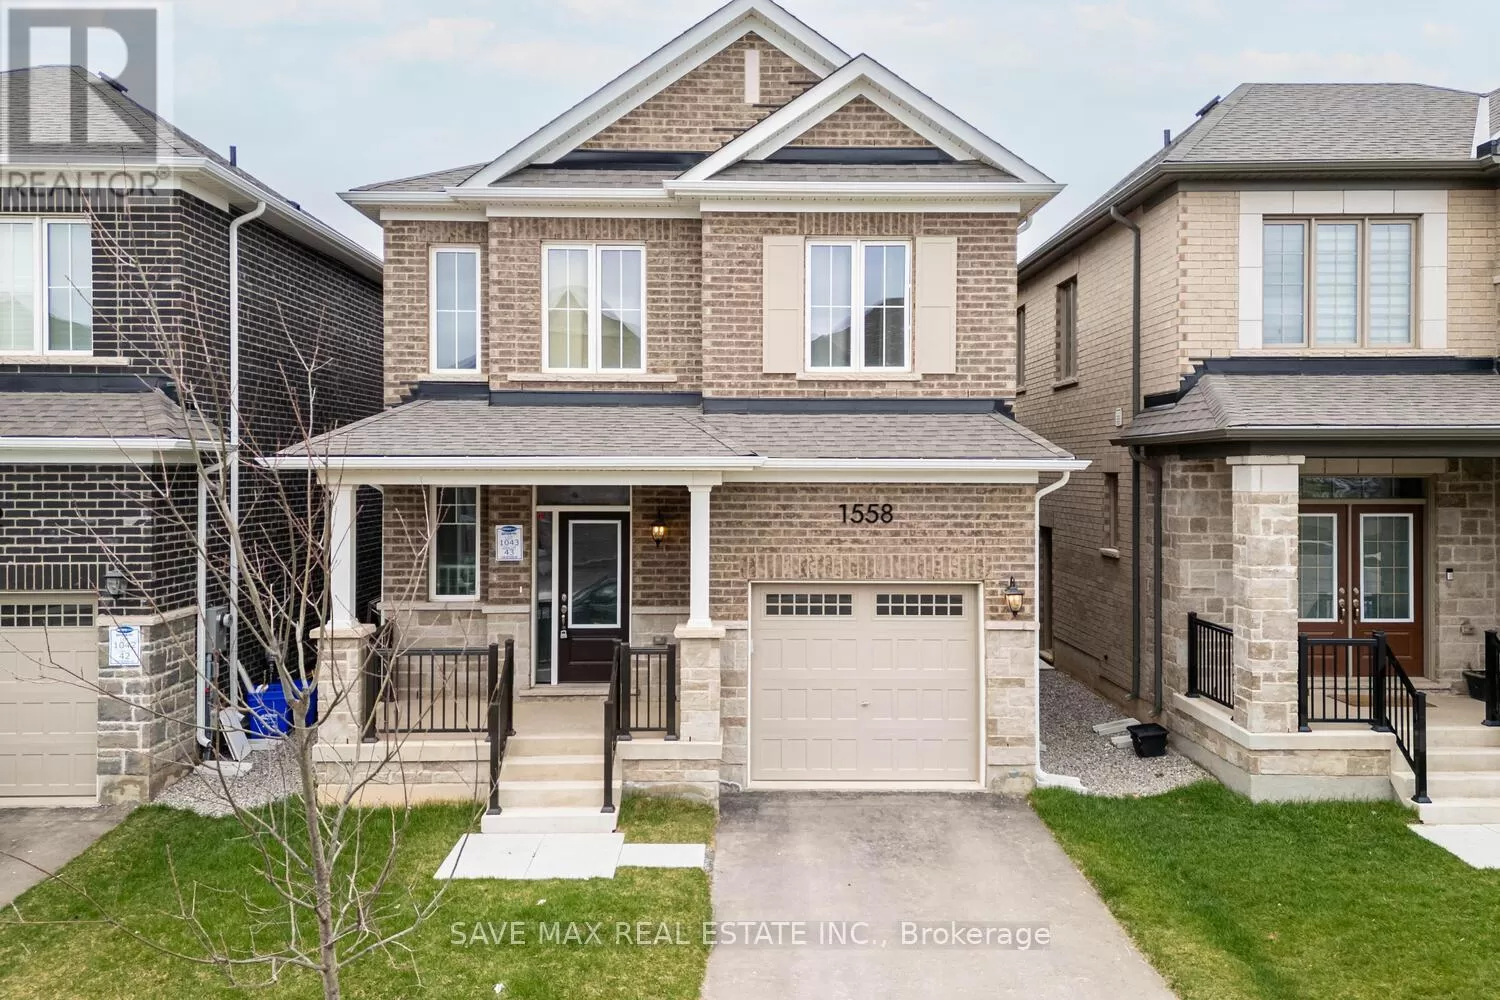 House for rent: 1558 Severn Dr, Milton, Ontario L9E 1X9